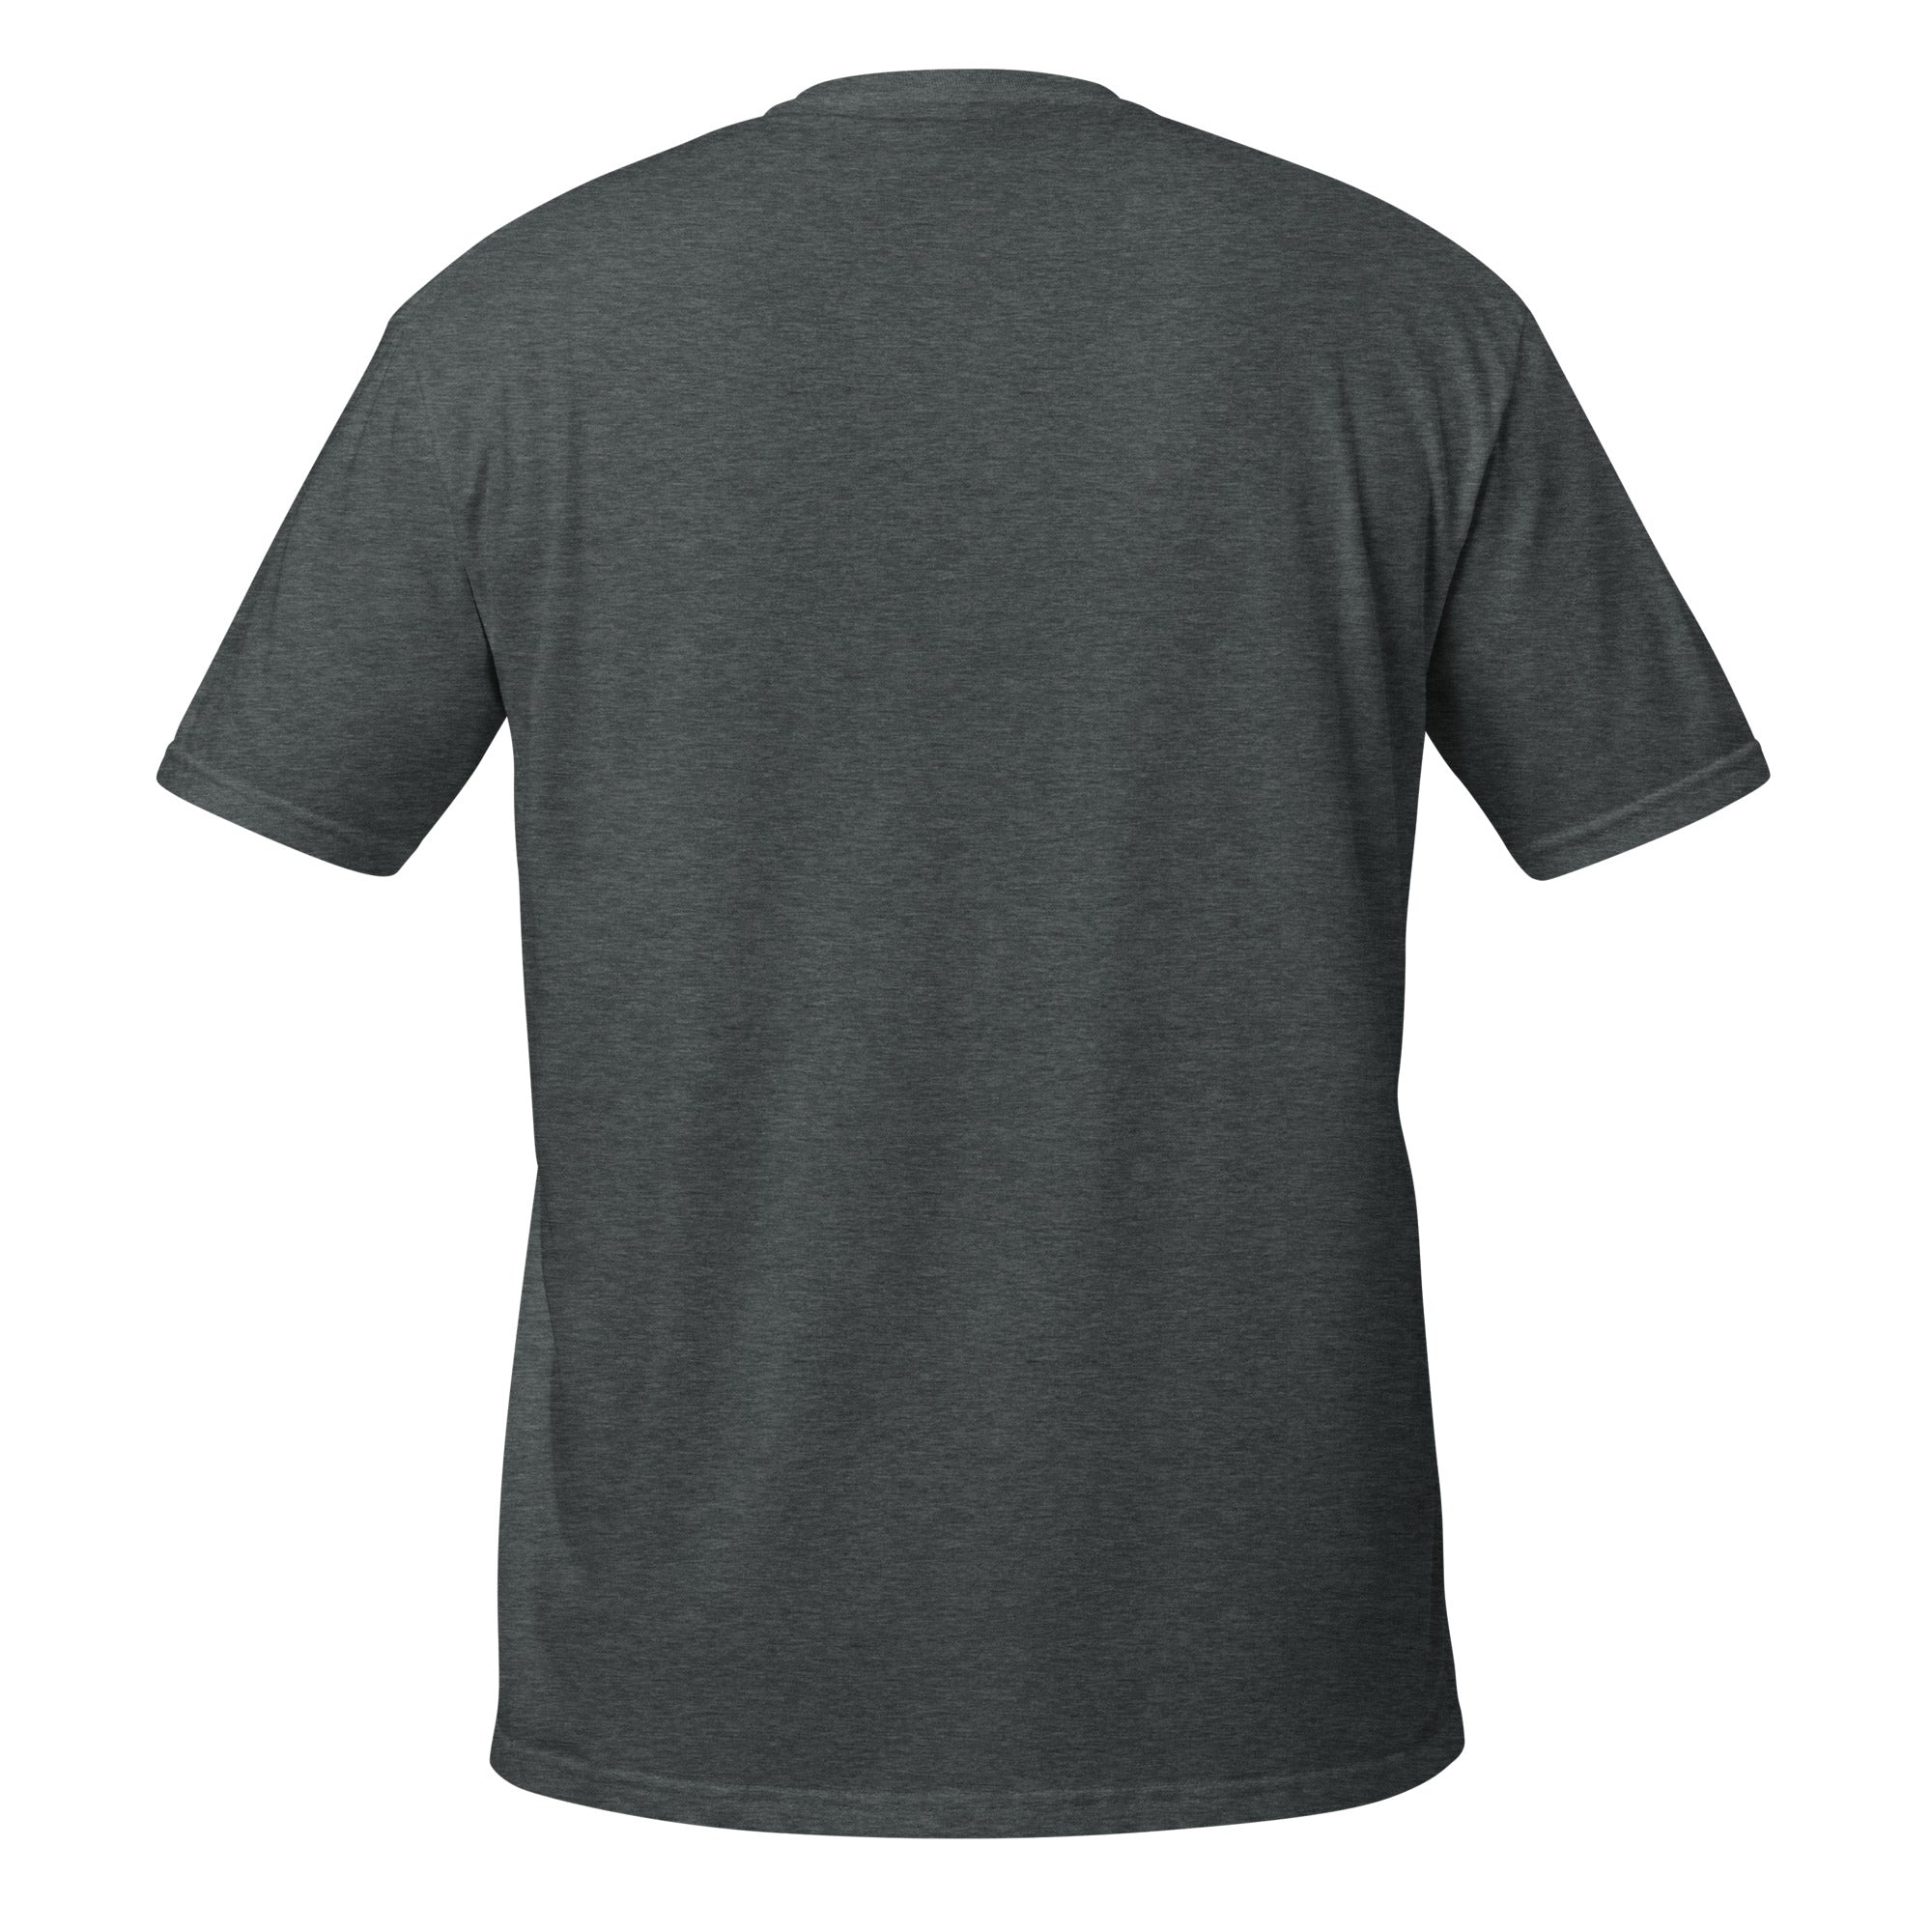 Short-Sleeve Unisex T-Shirt- Don't hide your pride